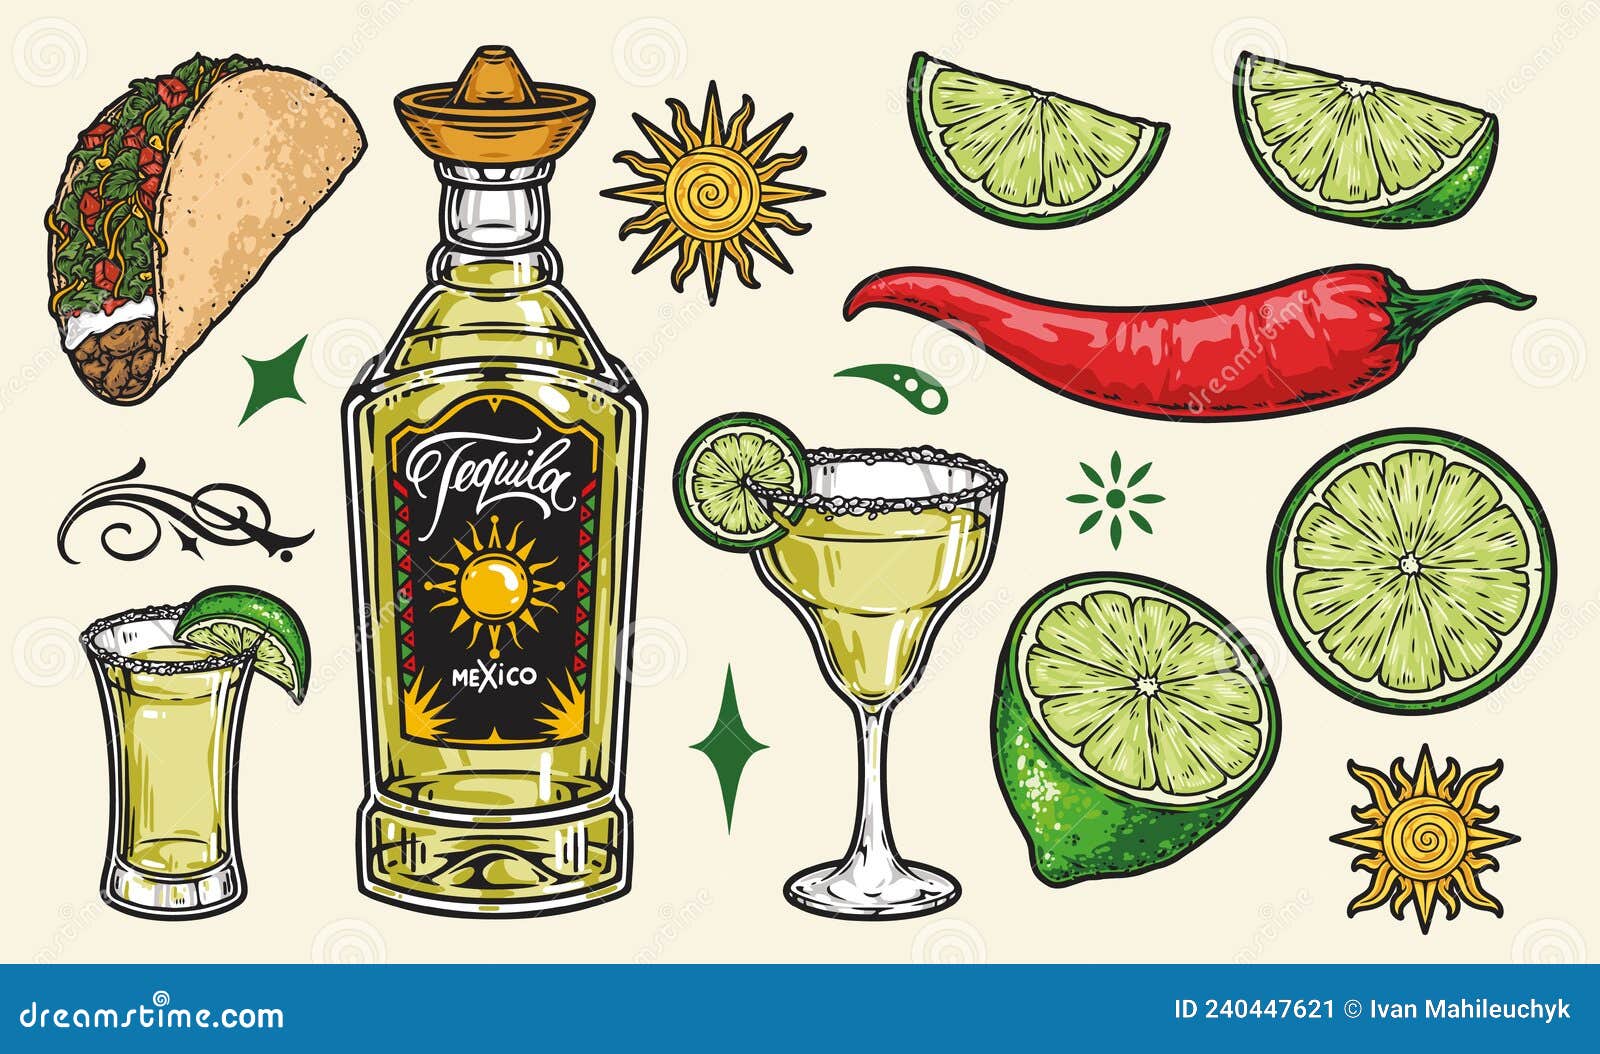 Colorful Vintage Elements of Tequila Drink Stock Vector - Illustration of  bottle, sign: 240447621